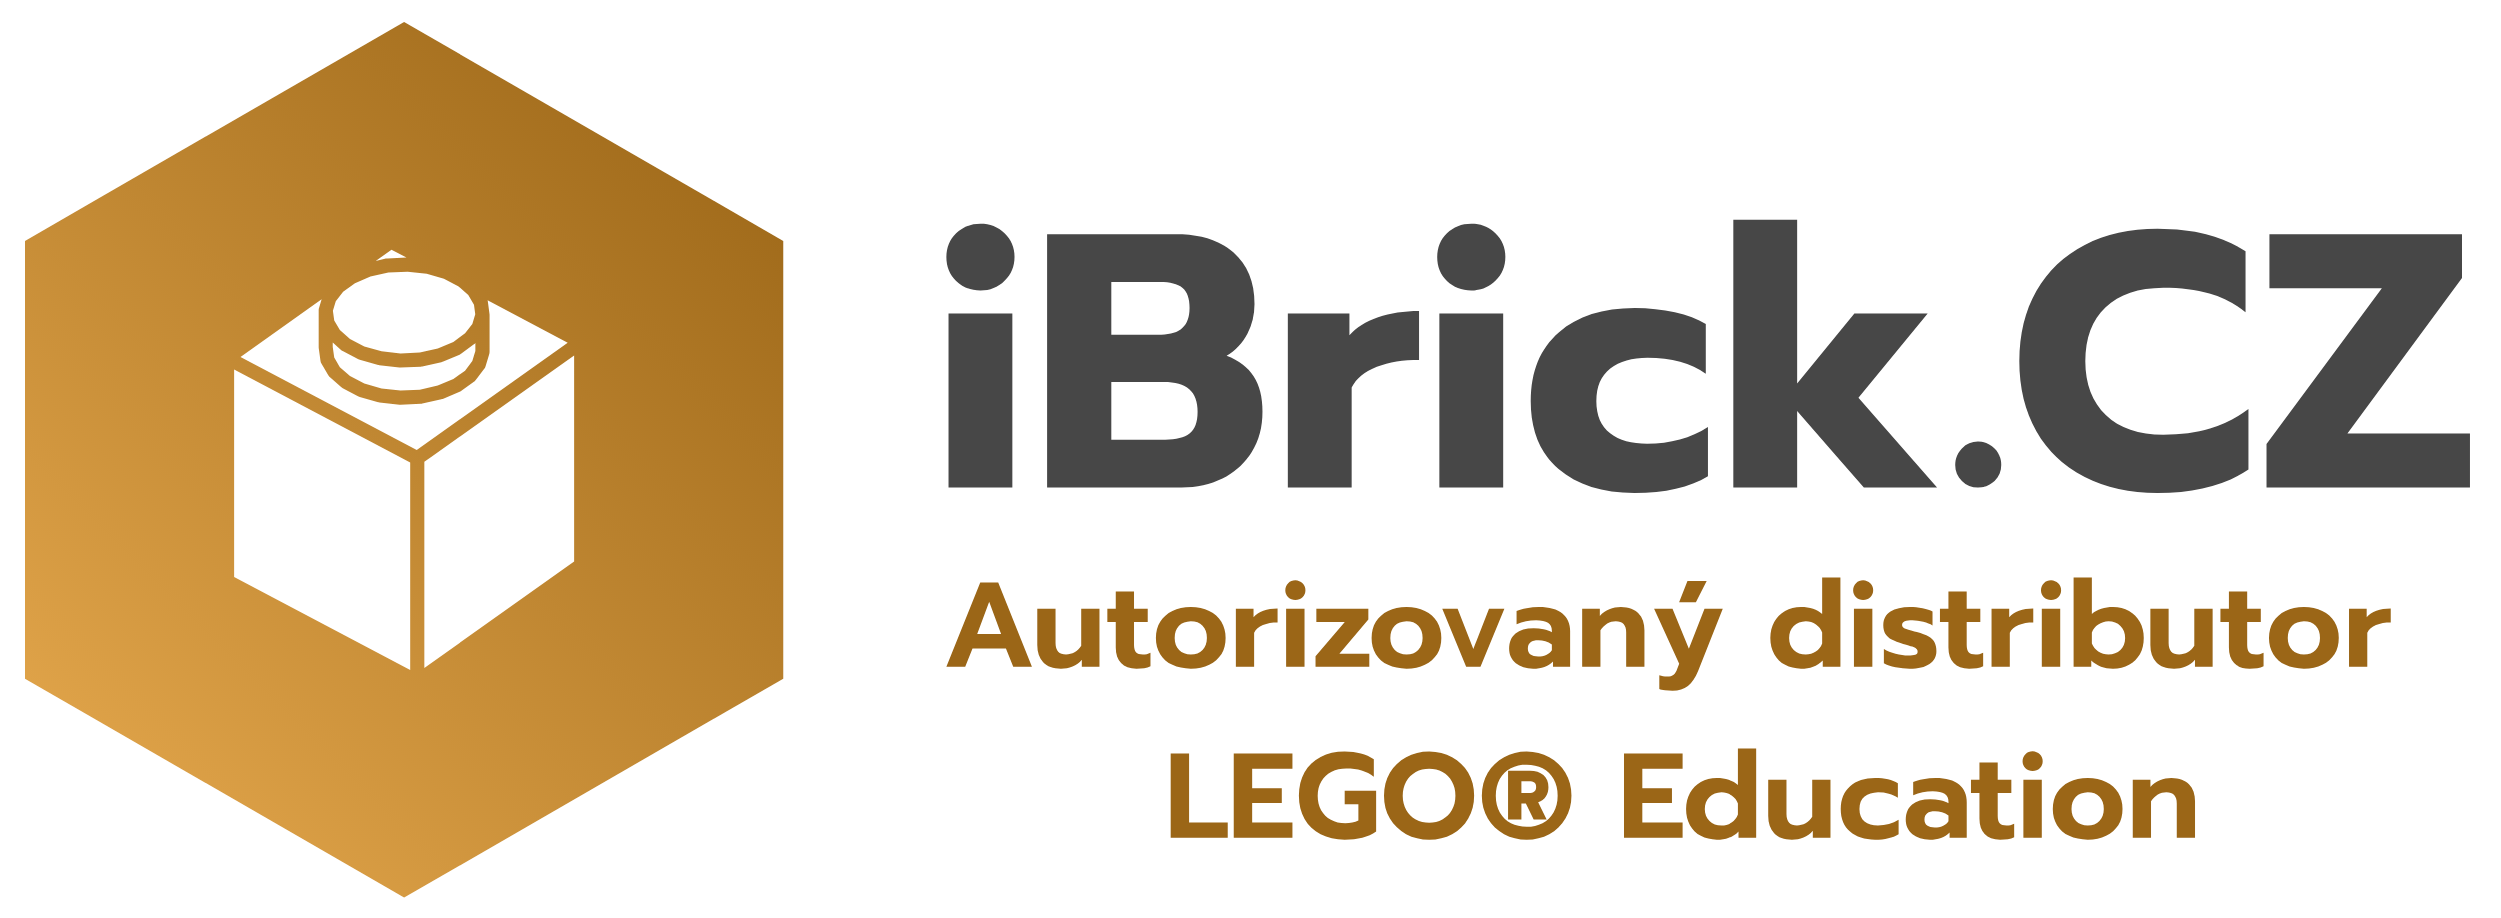 iBrick.cz